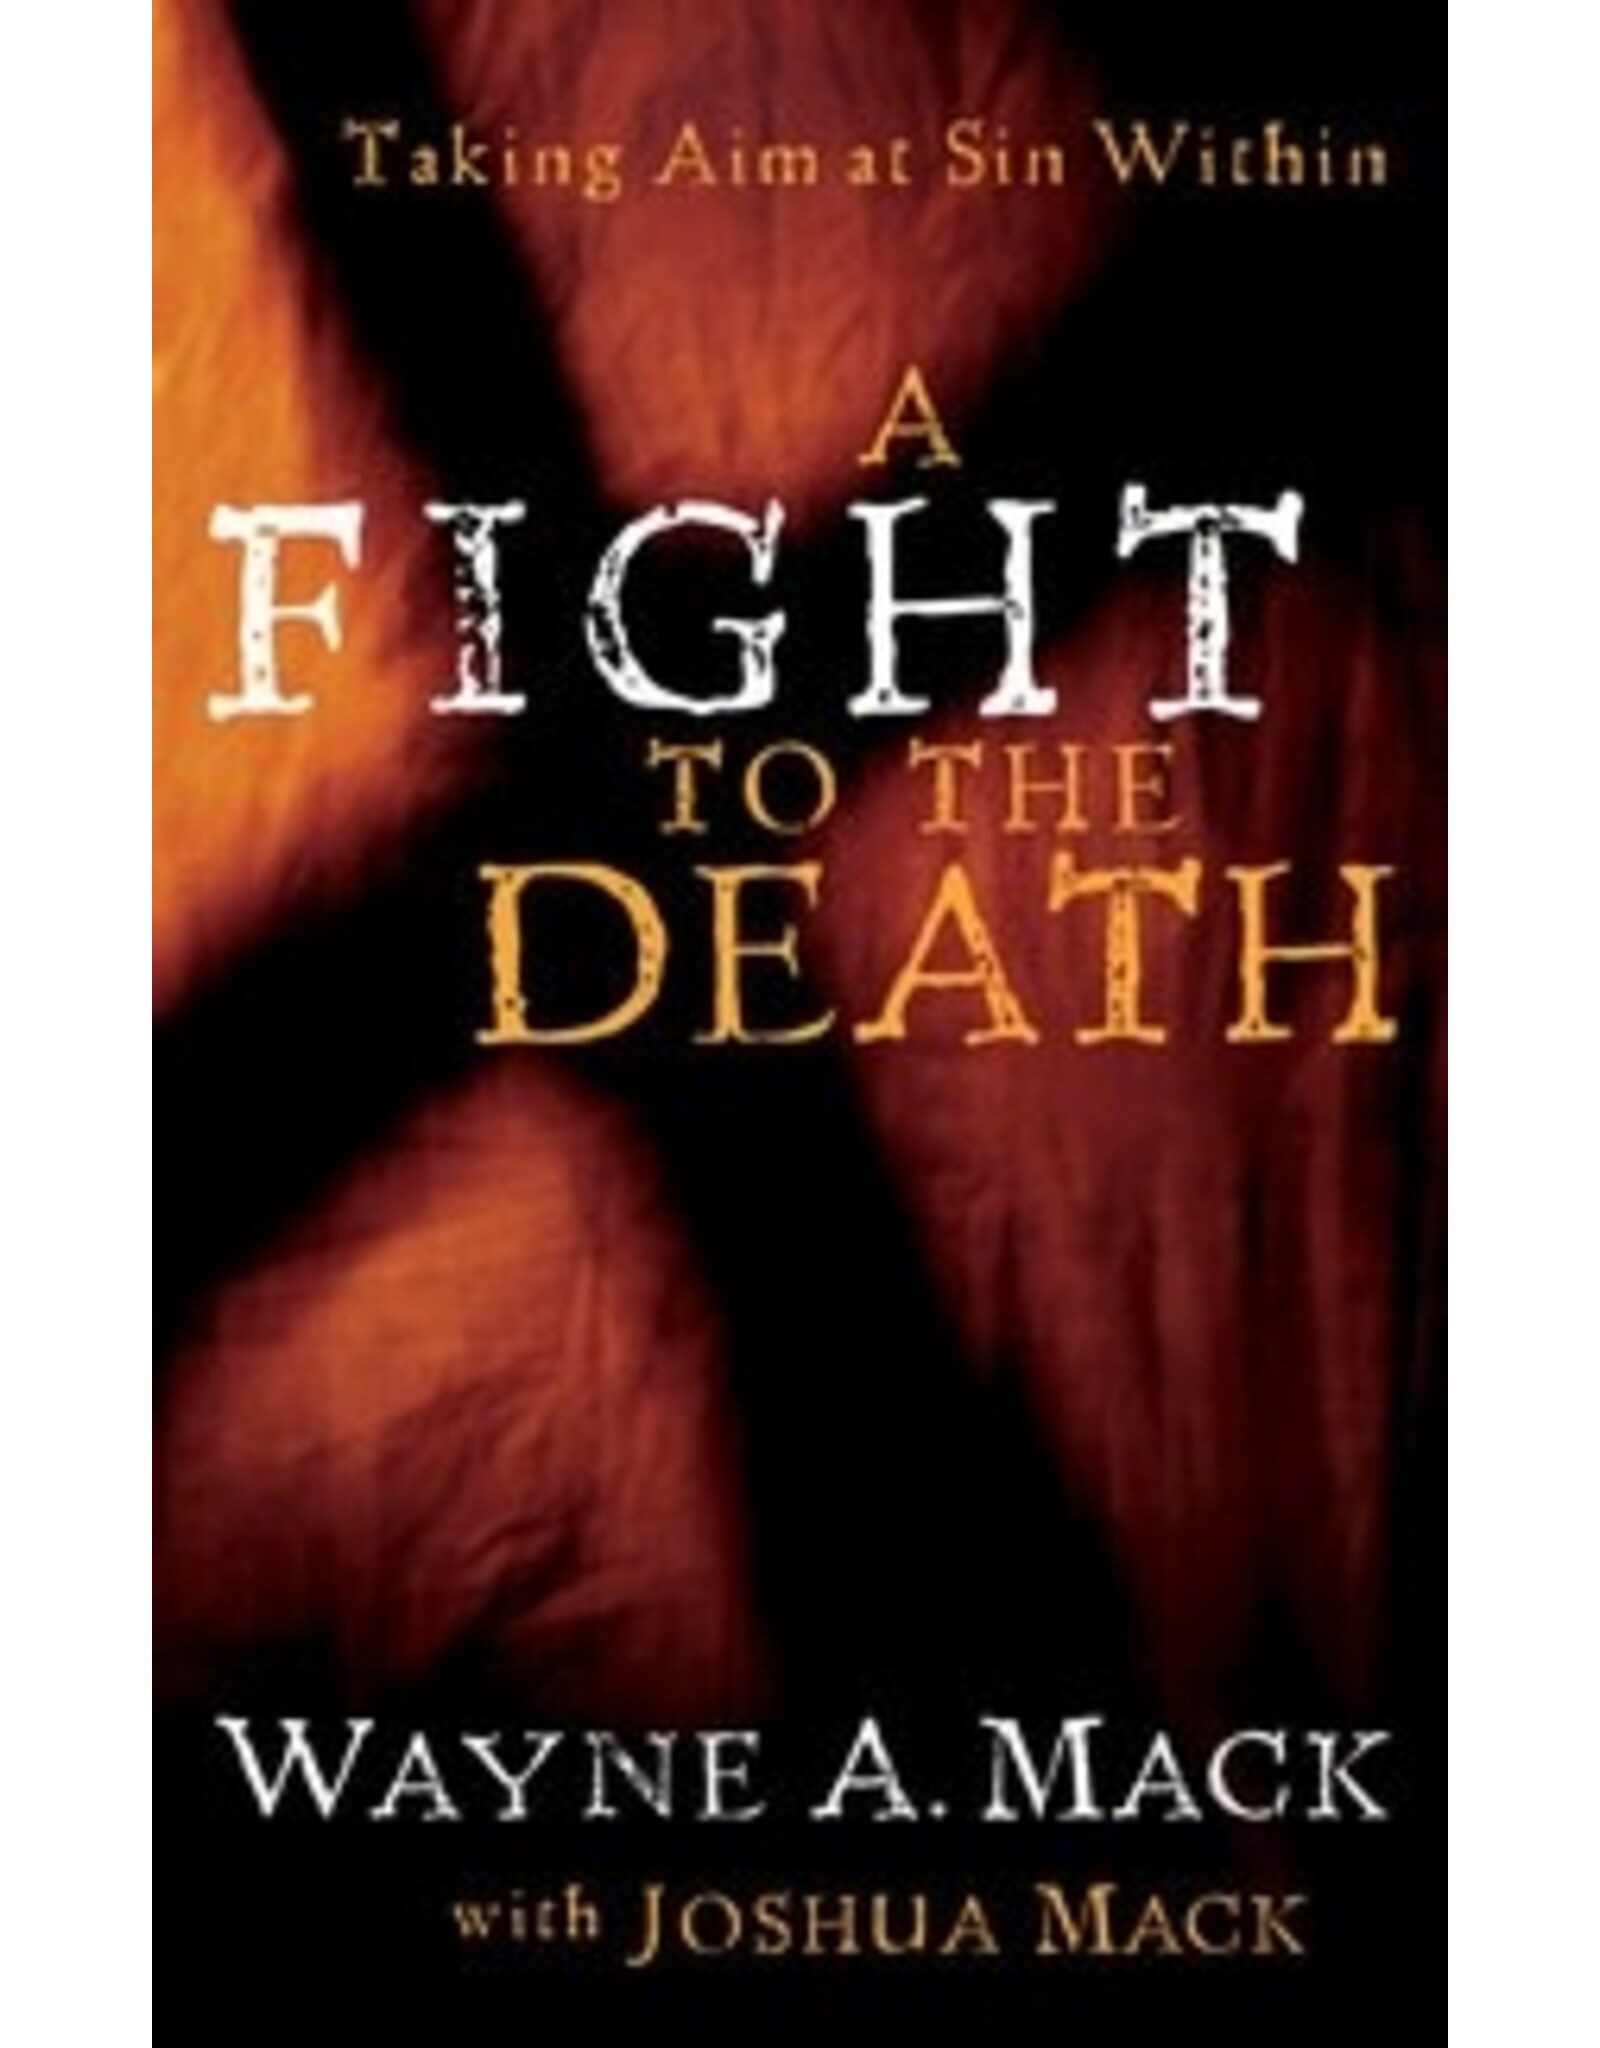 Wayne A Mack A Fight to the Death